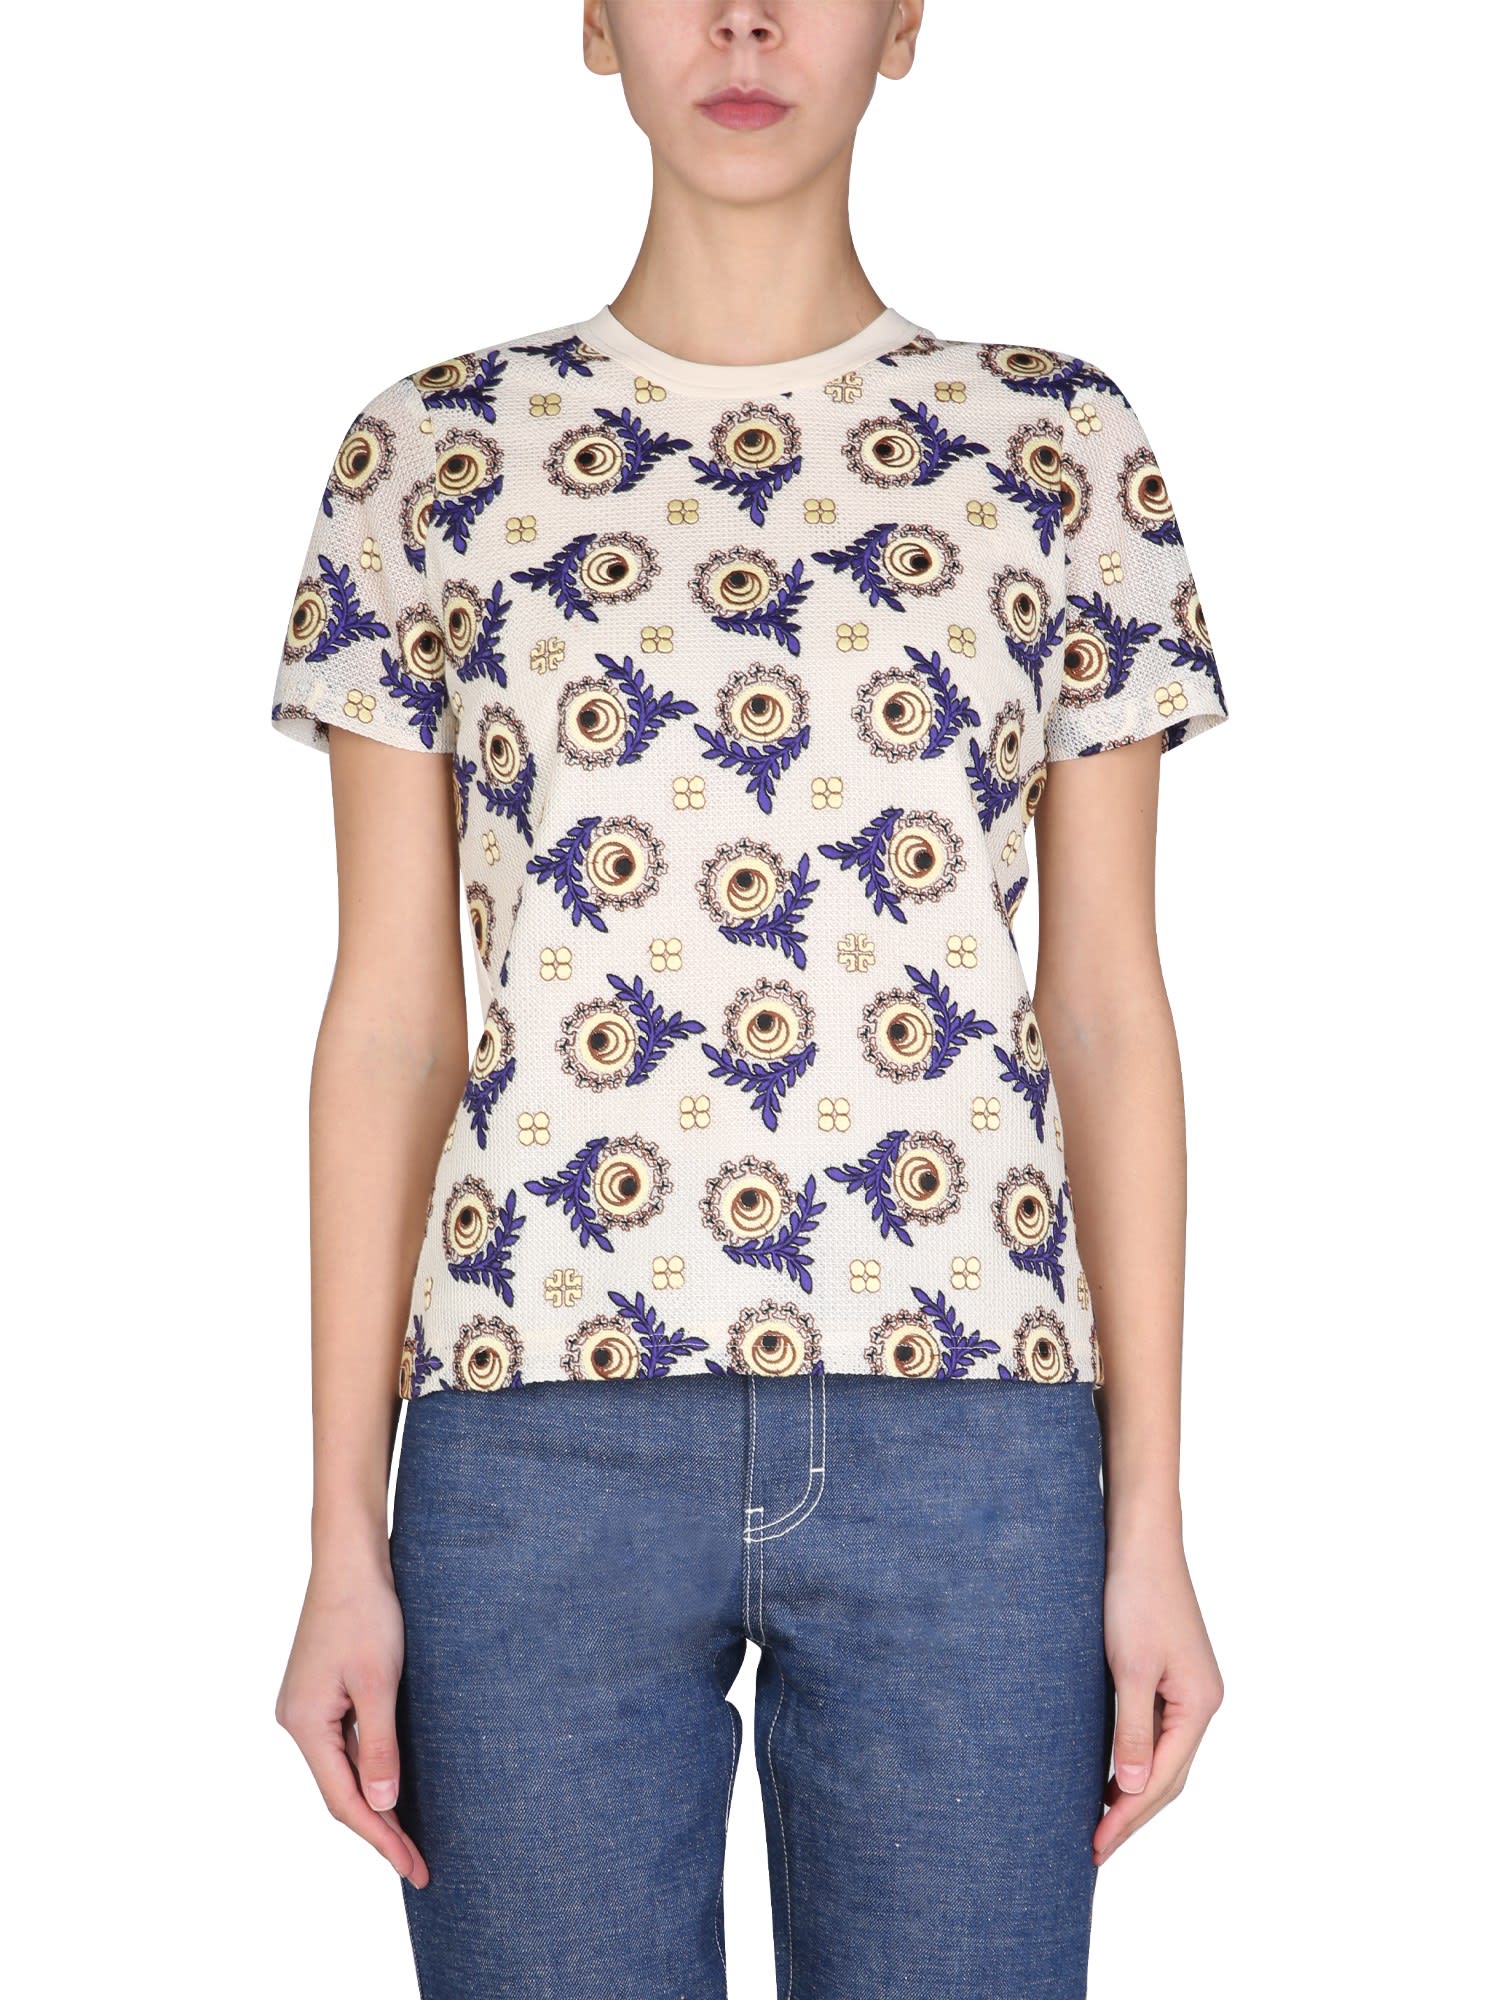 Tory Burch Floral Pattern T-shirt